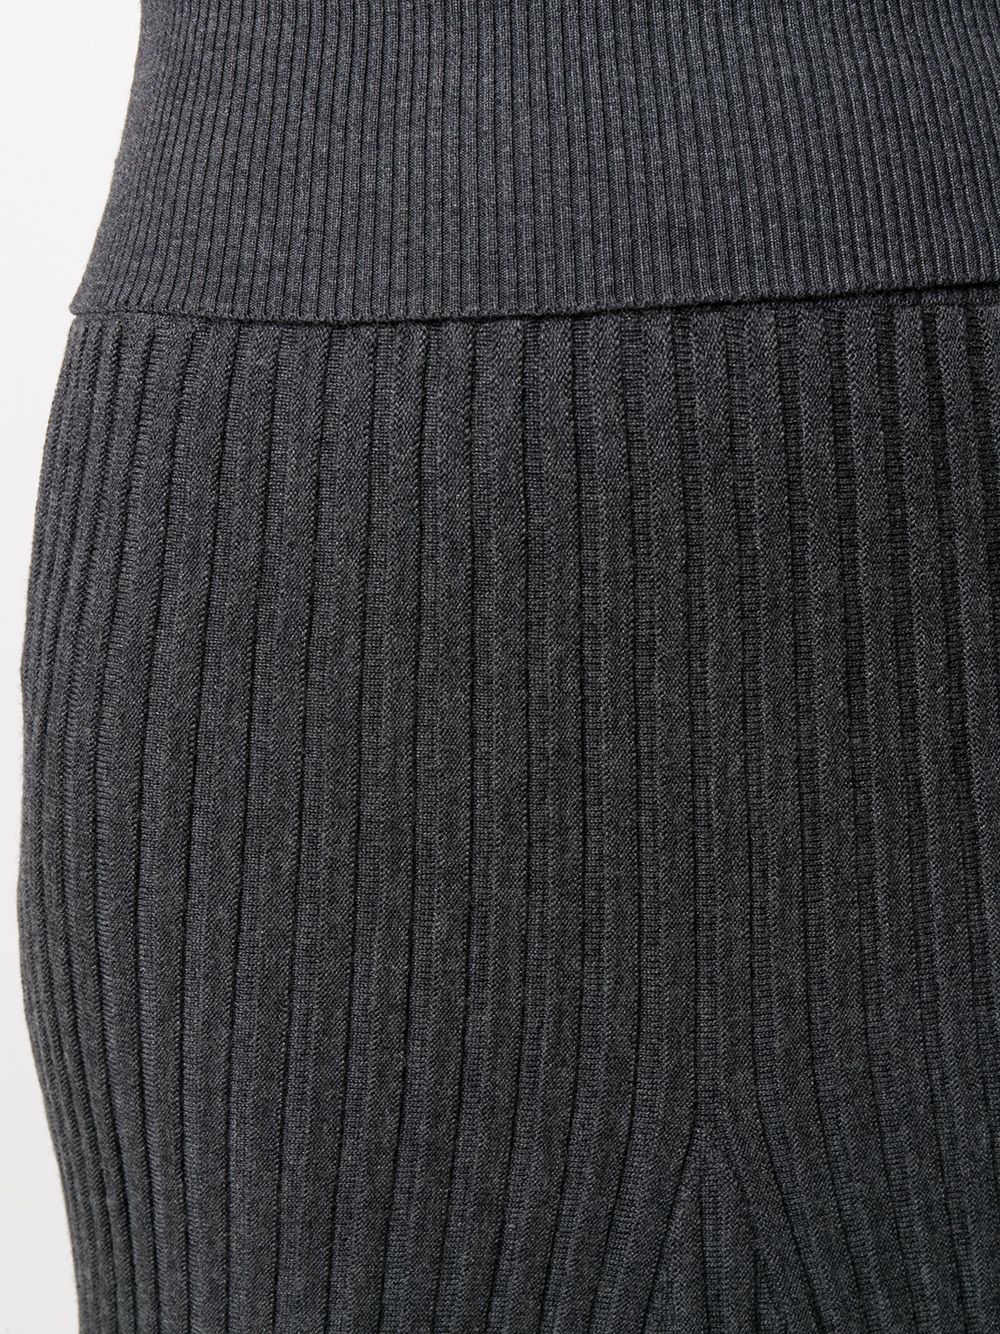 фото Kenzo юбка в рубчик со складками